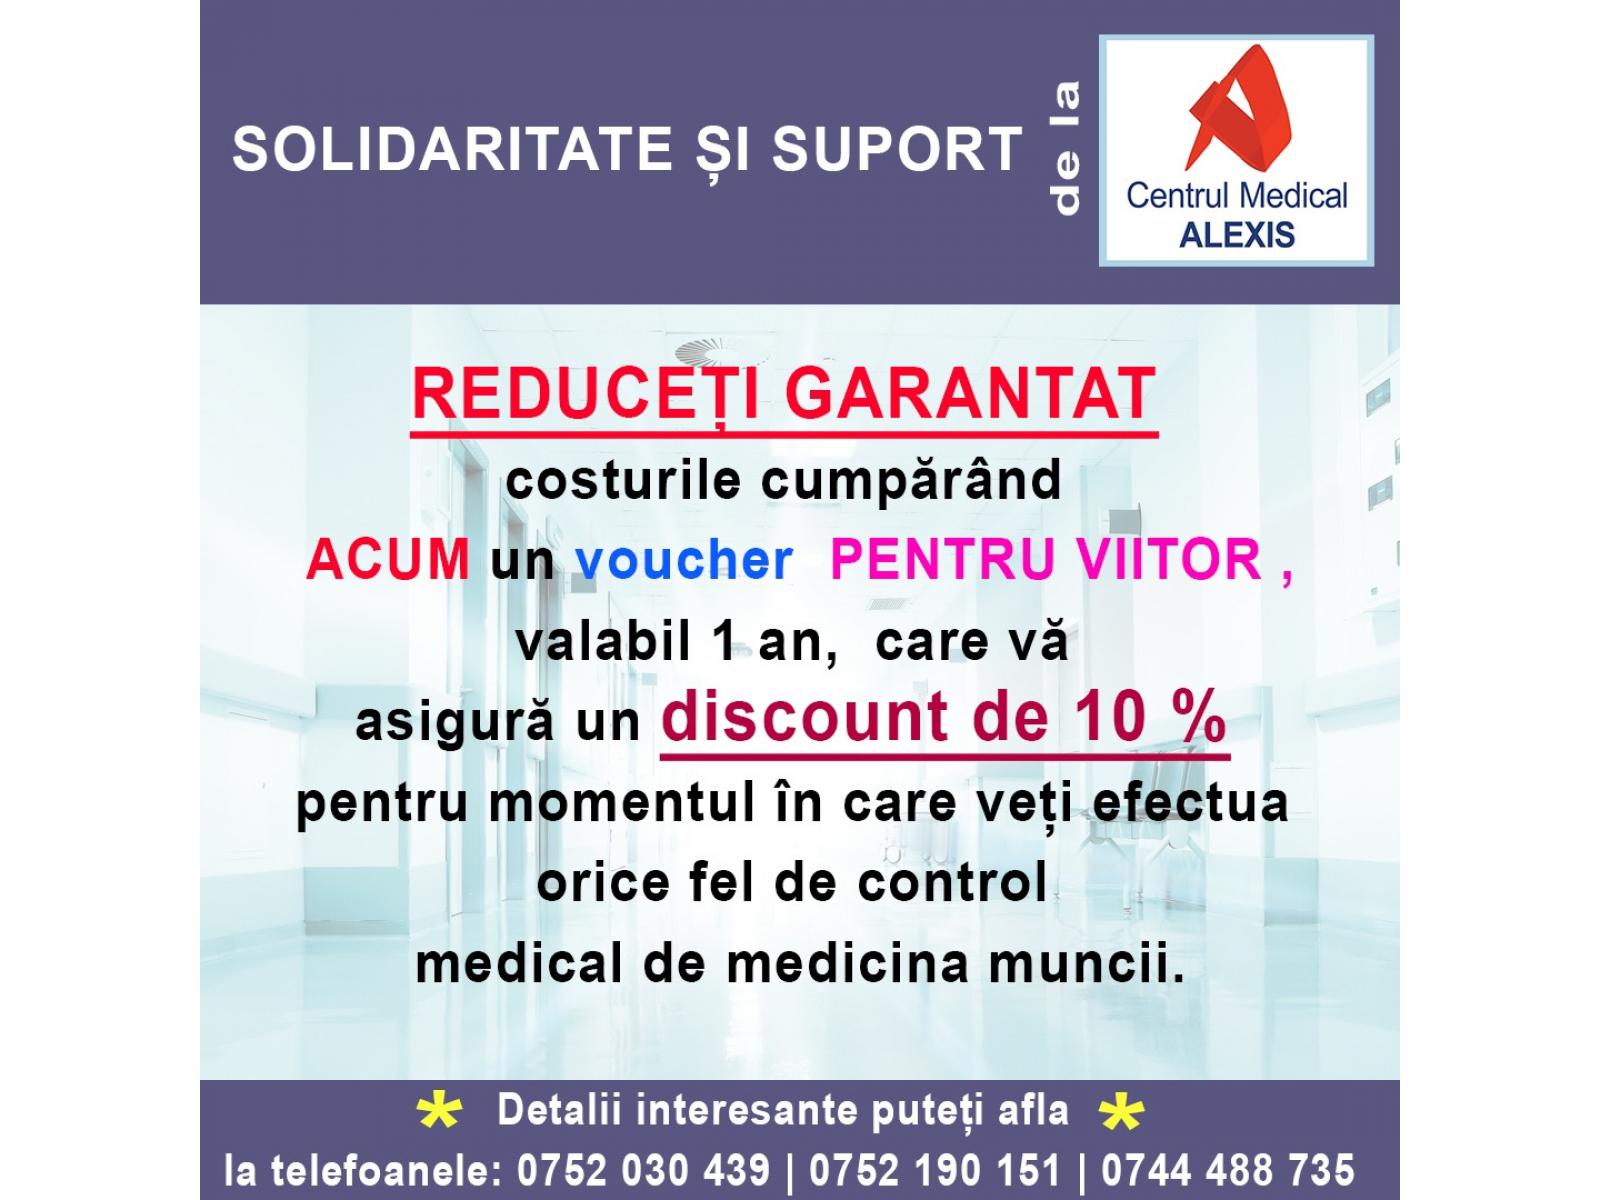 Centrul Medical Alexis - voucher-pj-solidaritate-si-sport-CM-Alexis.jpeg